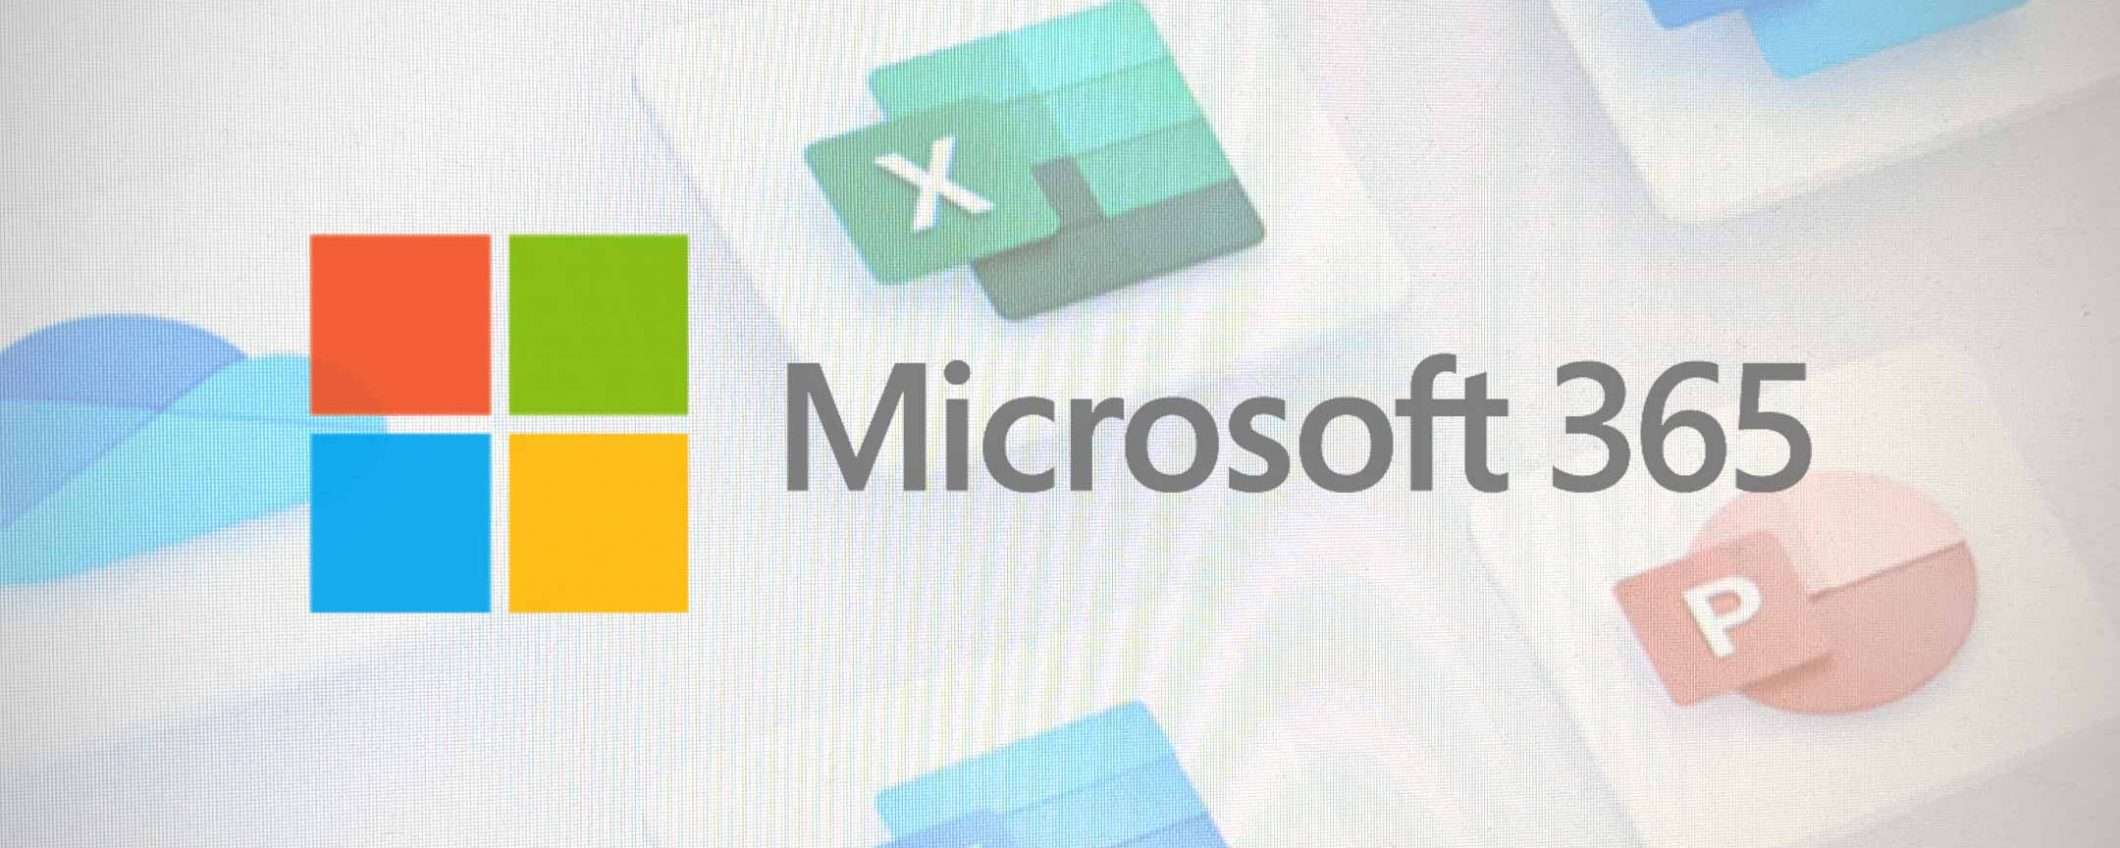 Microsoft 365: problemi di accesso a numerosi servizi (update)